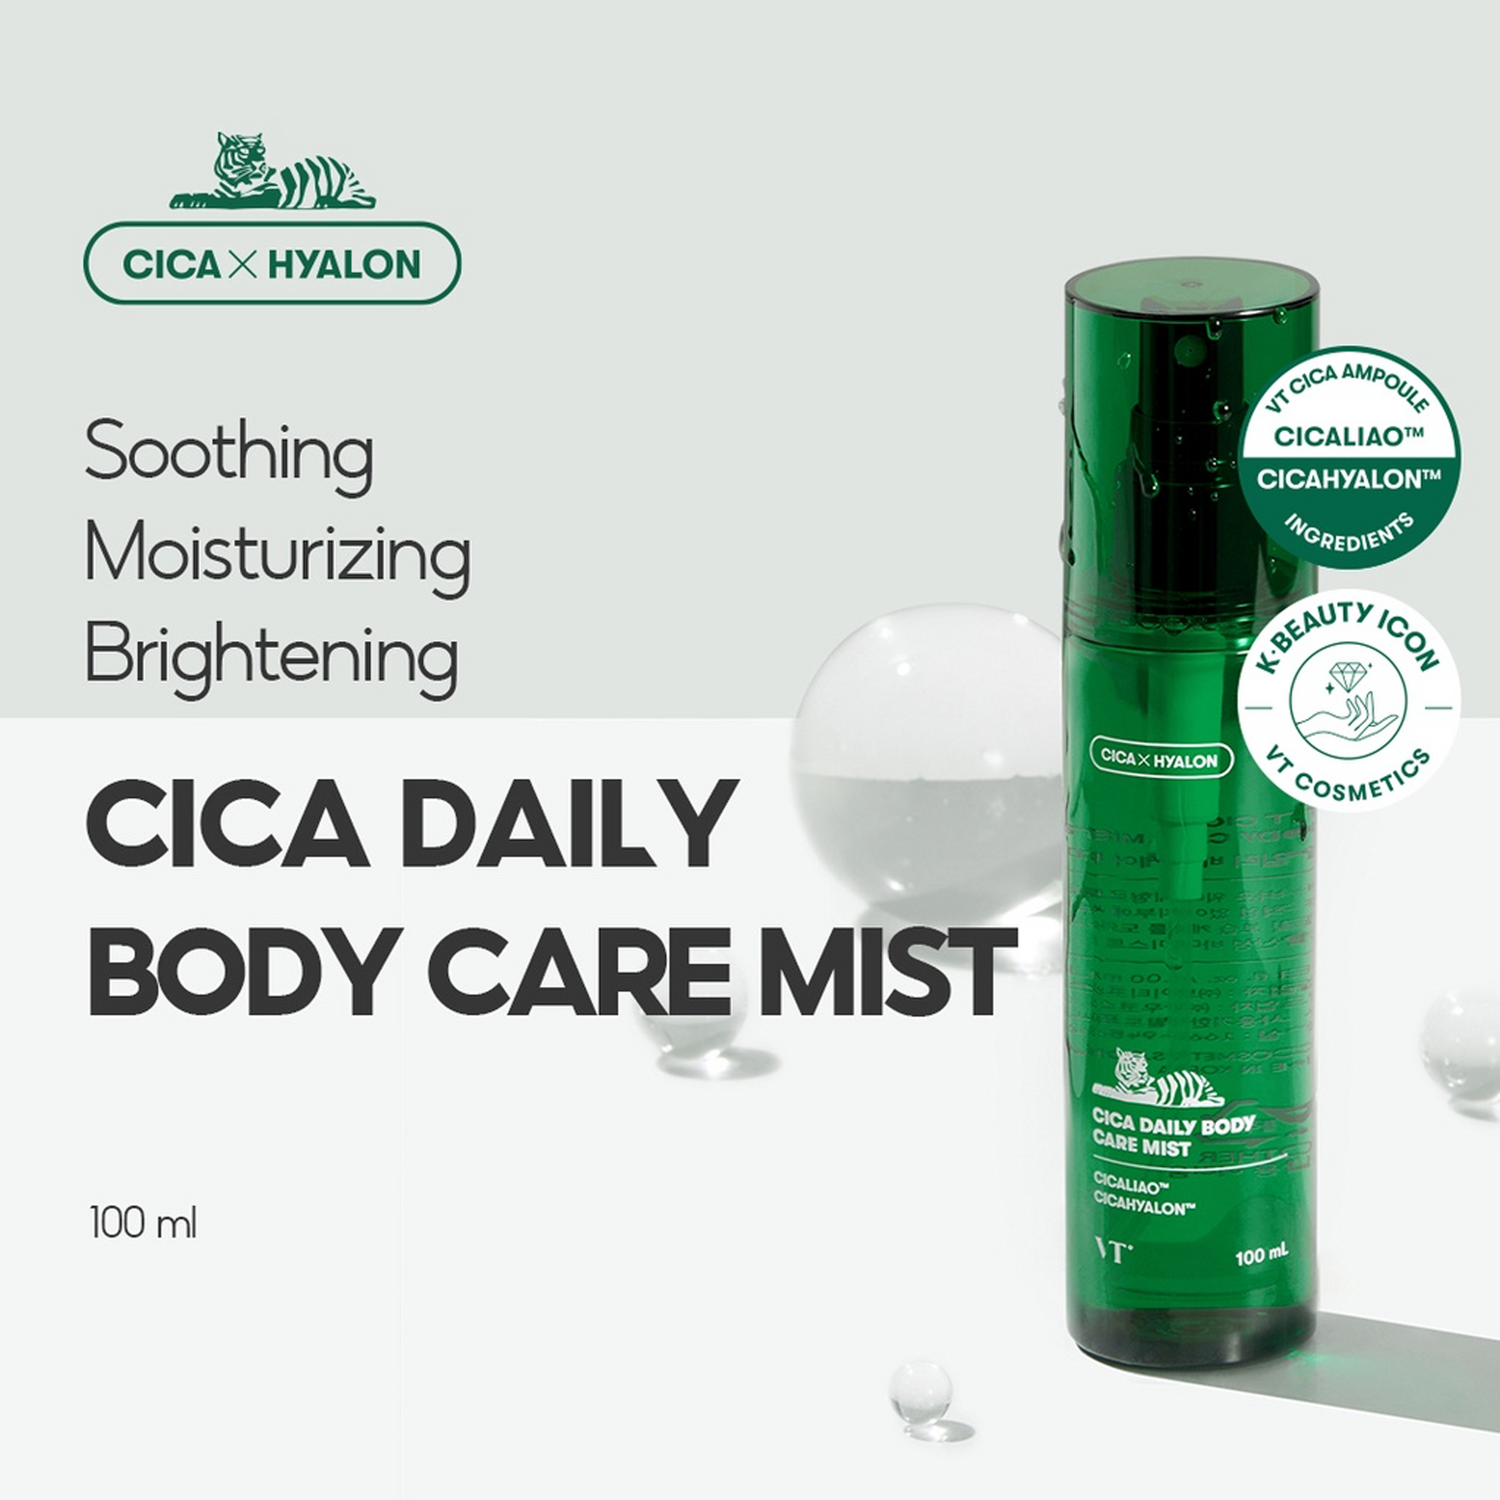 VT - Cica Daily Body Care Mist 100ml